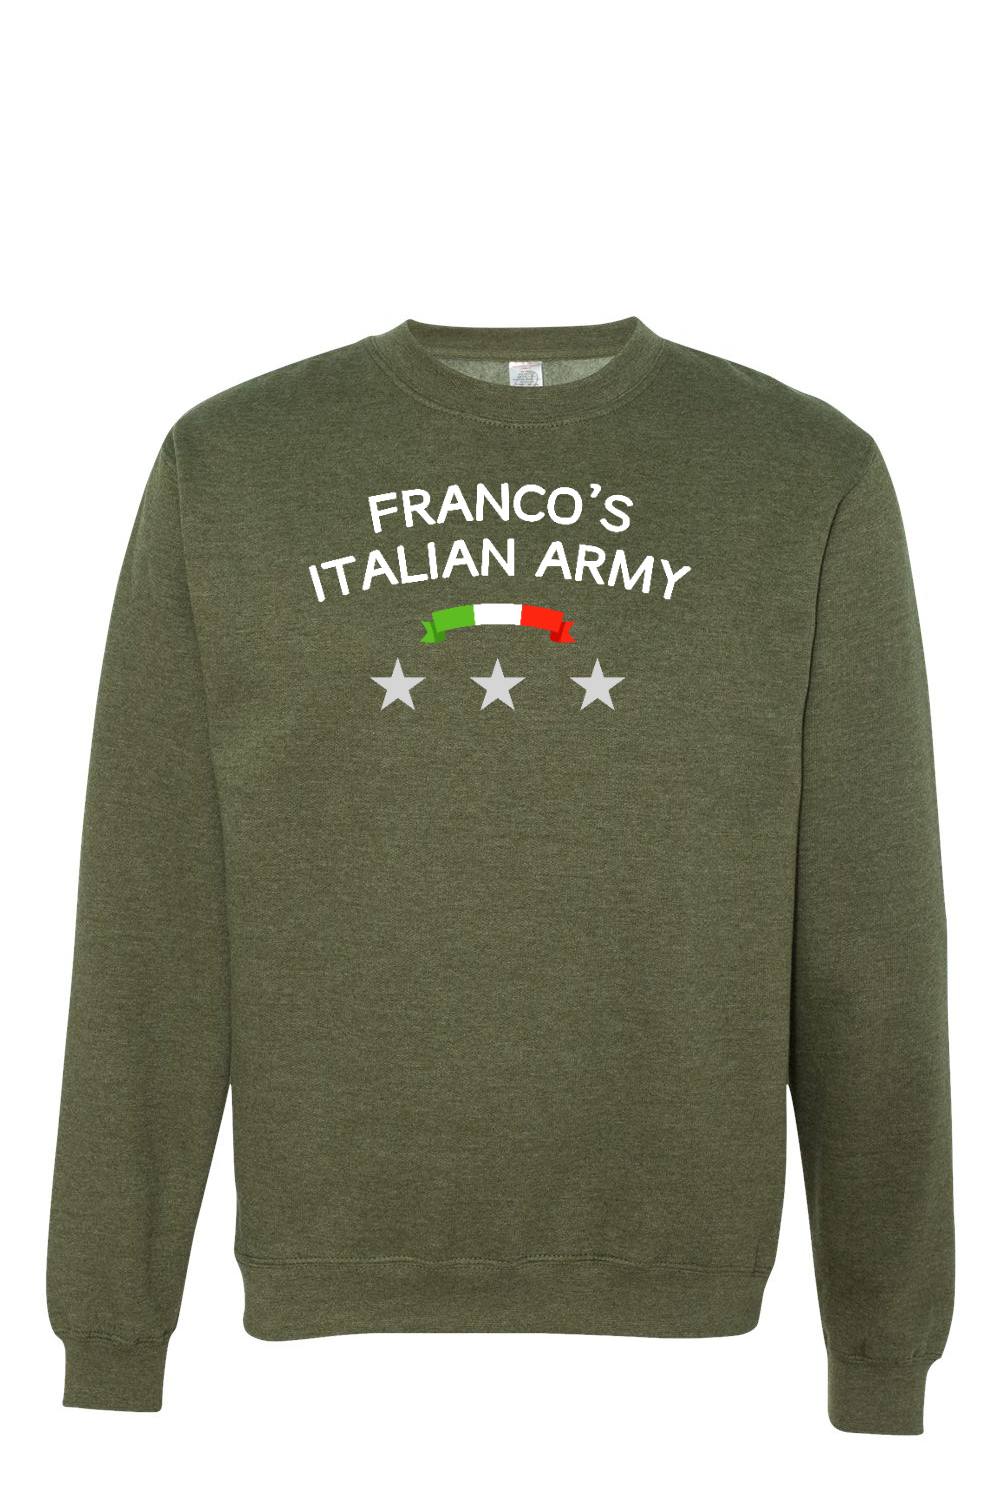 Franco's Italian Army - Premium Crewneck Sweatshirt - Yinzylvania